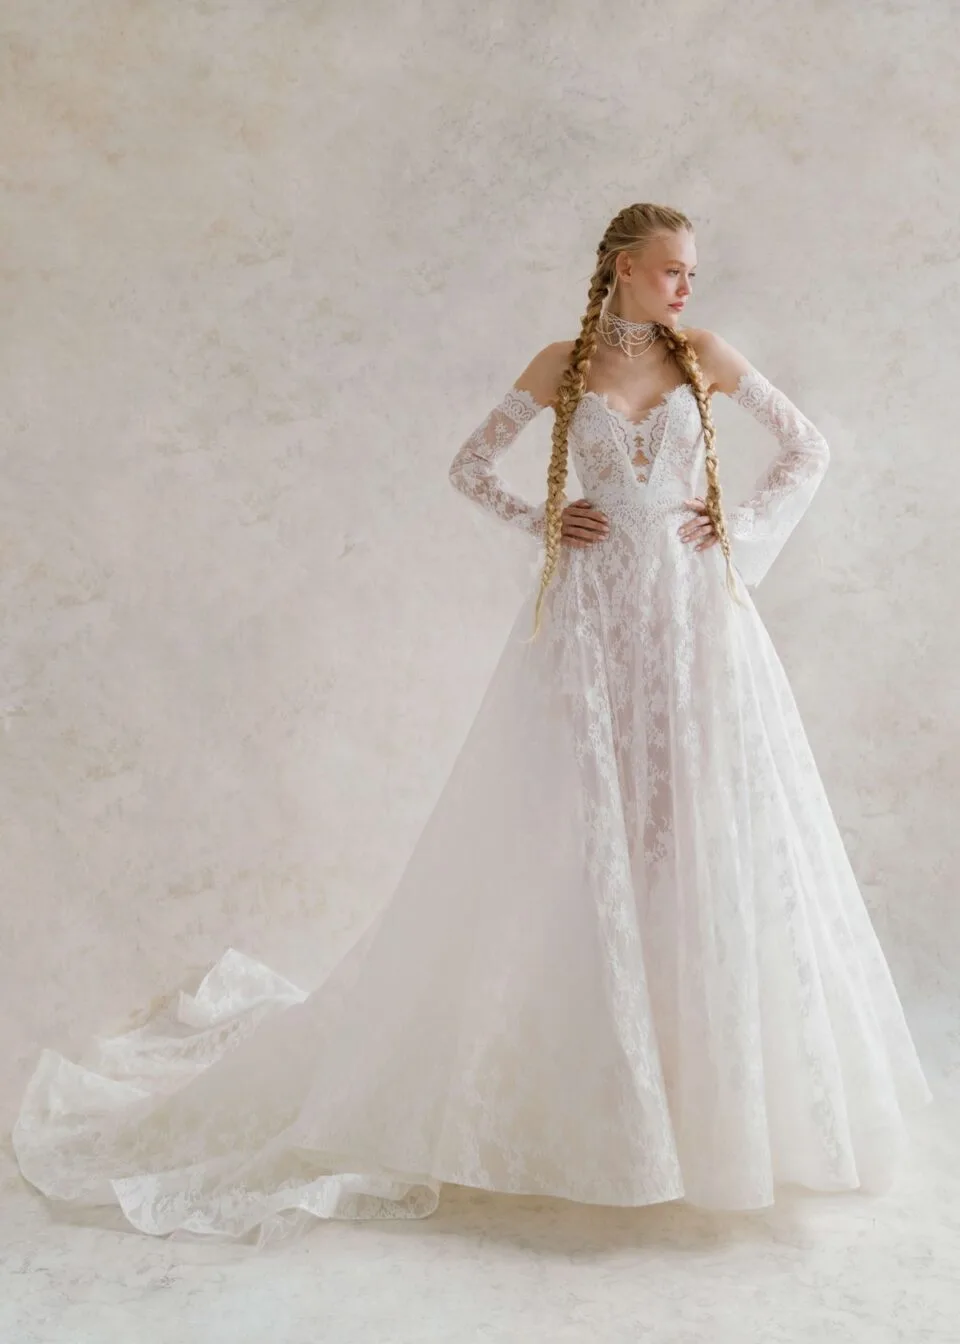 Amber lace wedding dress, by Rara Avis.